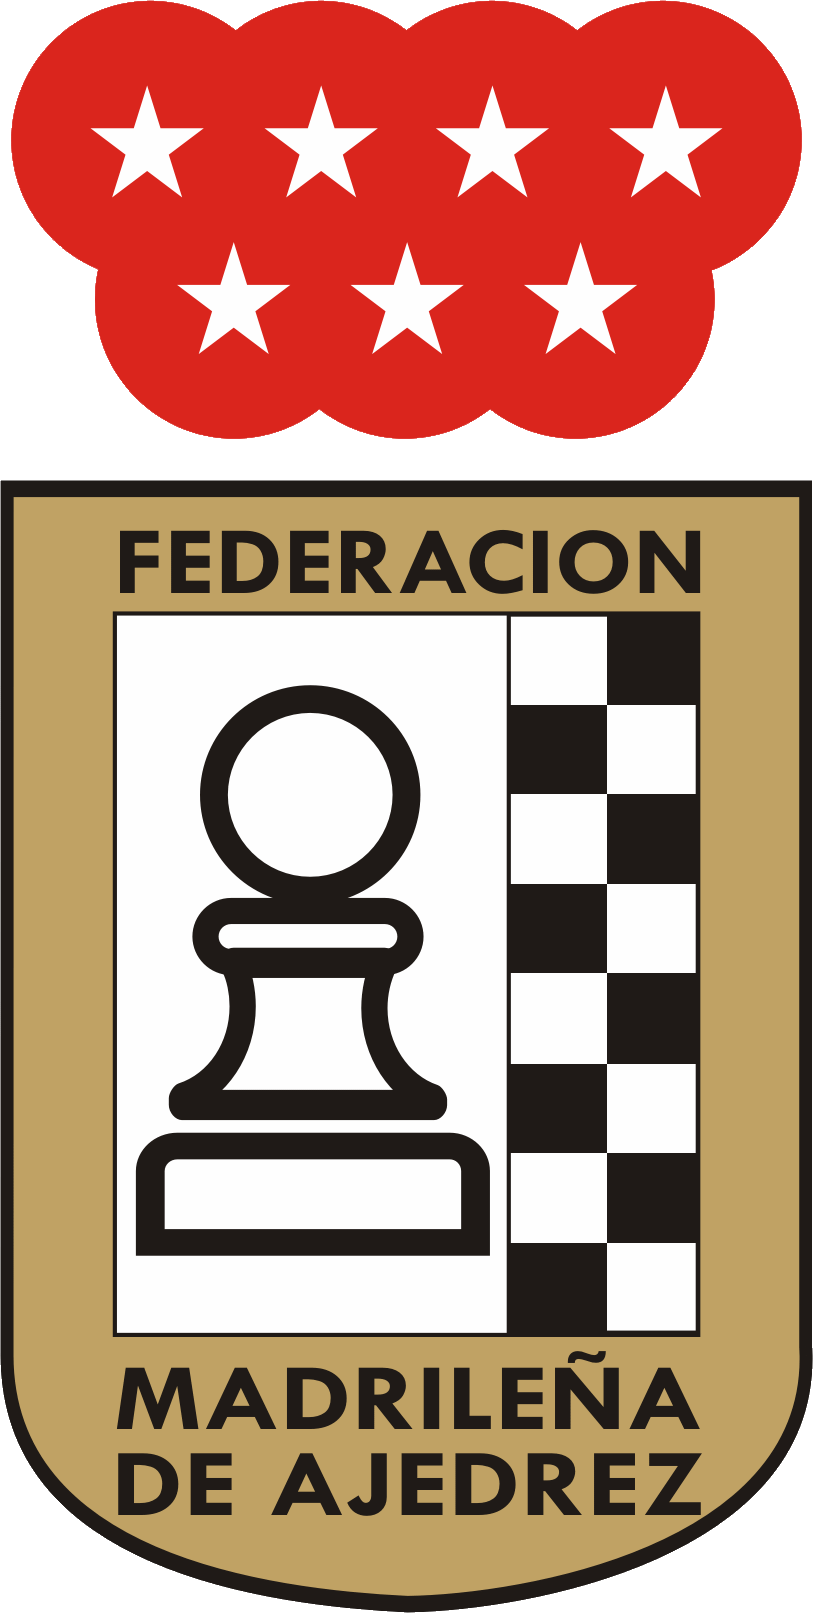 Federación Madrileña de Ajedrez